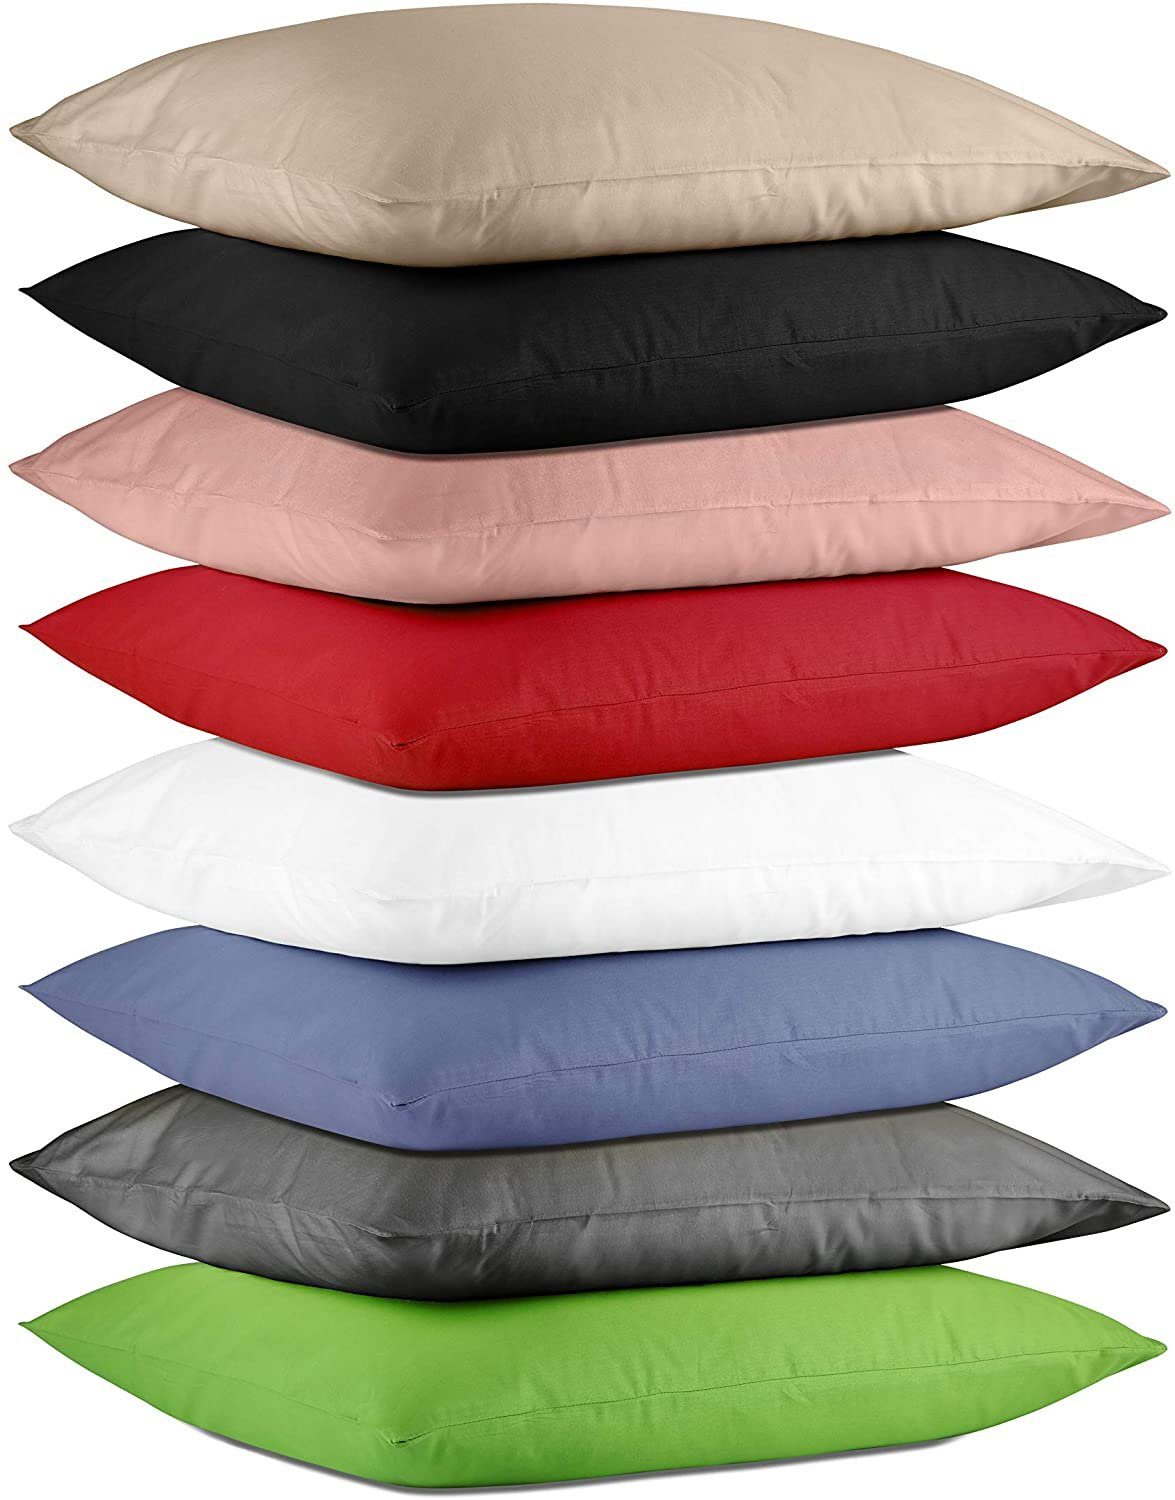 Kissenbezug 2er Set Kissenhülle Baumwolle Exklusive, Doppelpack Kissenbezüge ca. 115 g/m², Hometex Premium Textiles (2 Stück), mit verdecktem Reißverschluss Grün